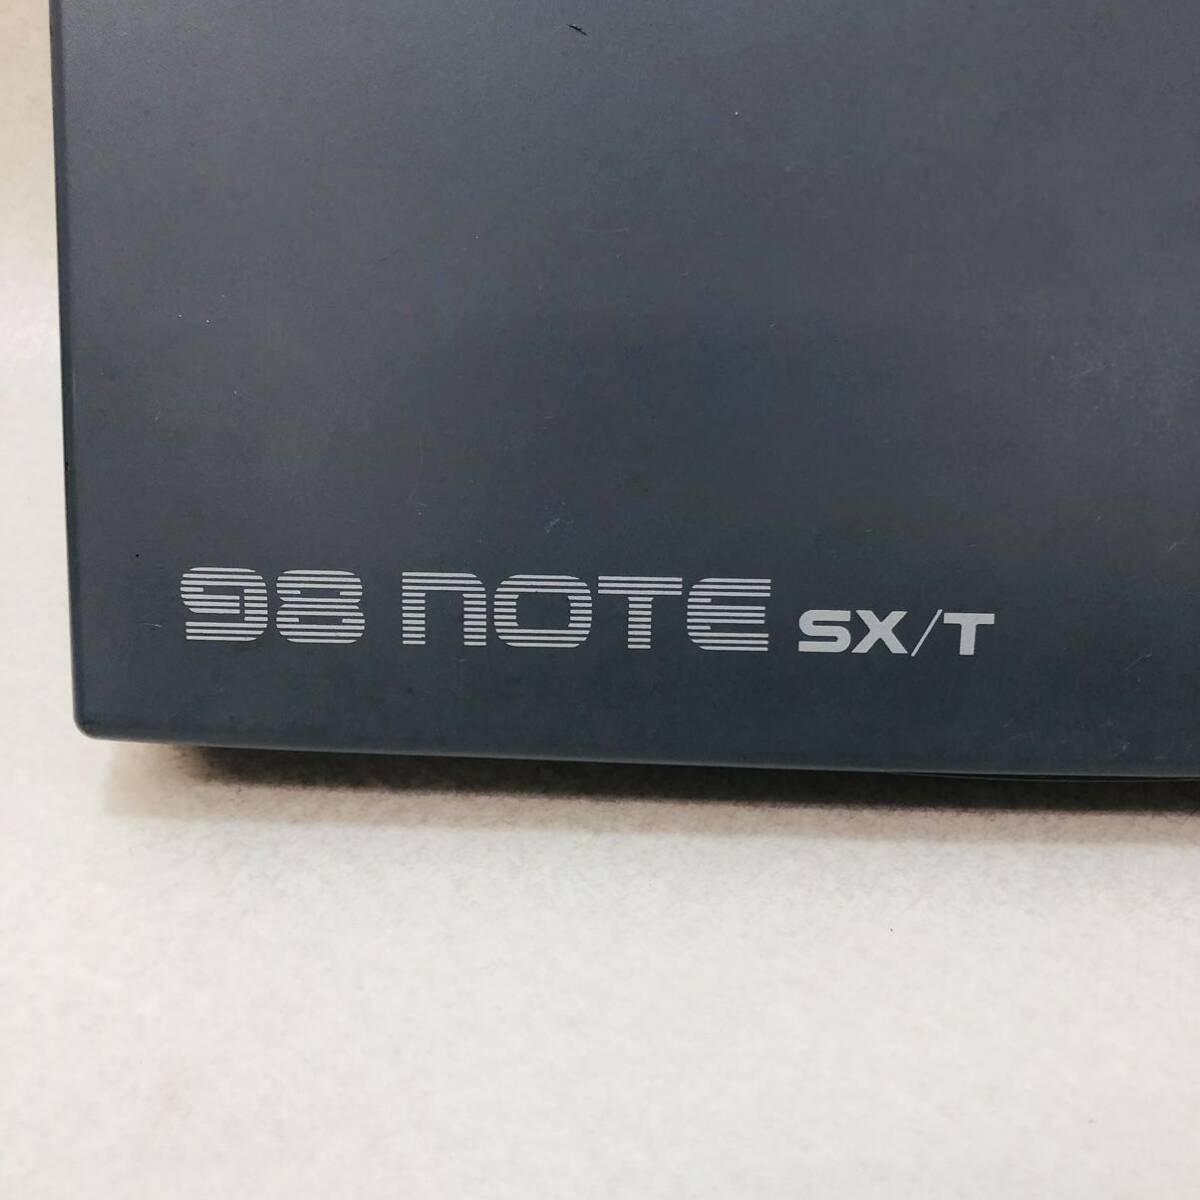 C4016* б/у товар * ноутбук NEC PC-9801 NS/T работоспособность не проверялась б/у товар 